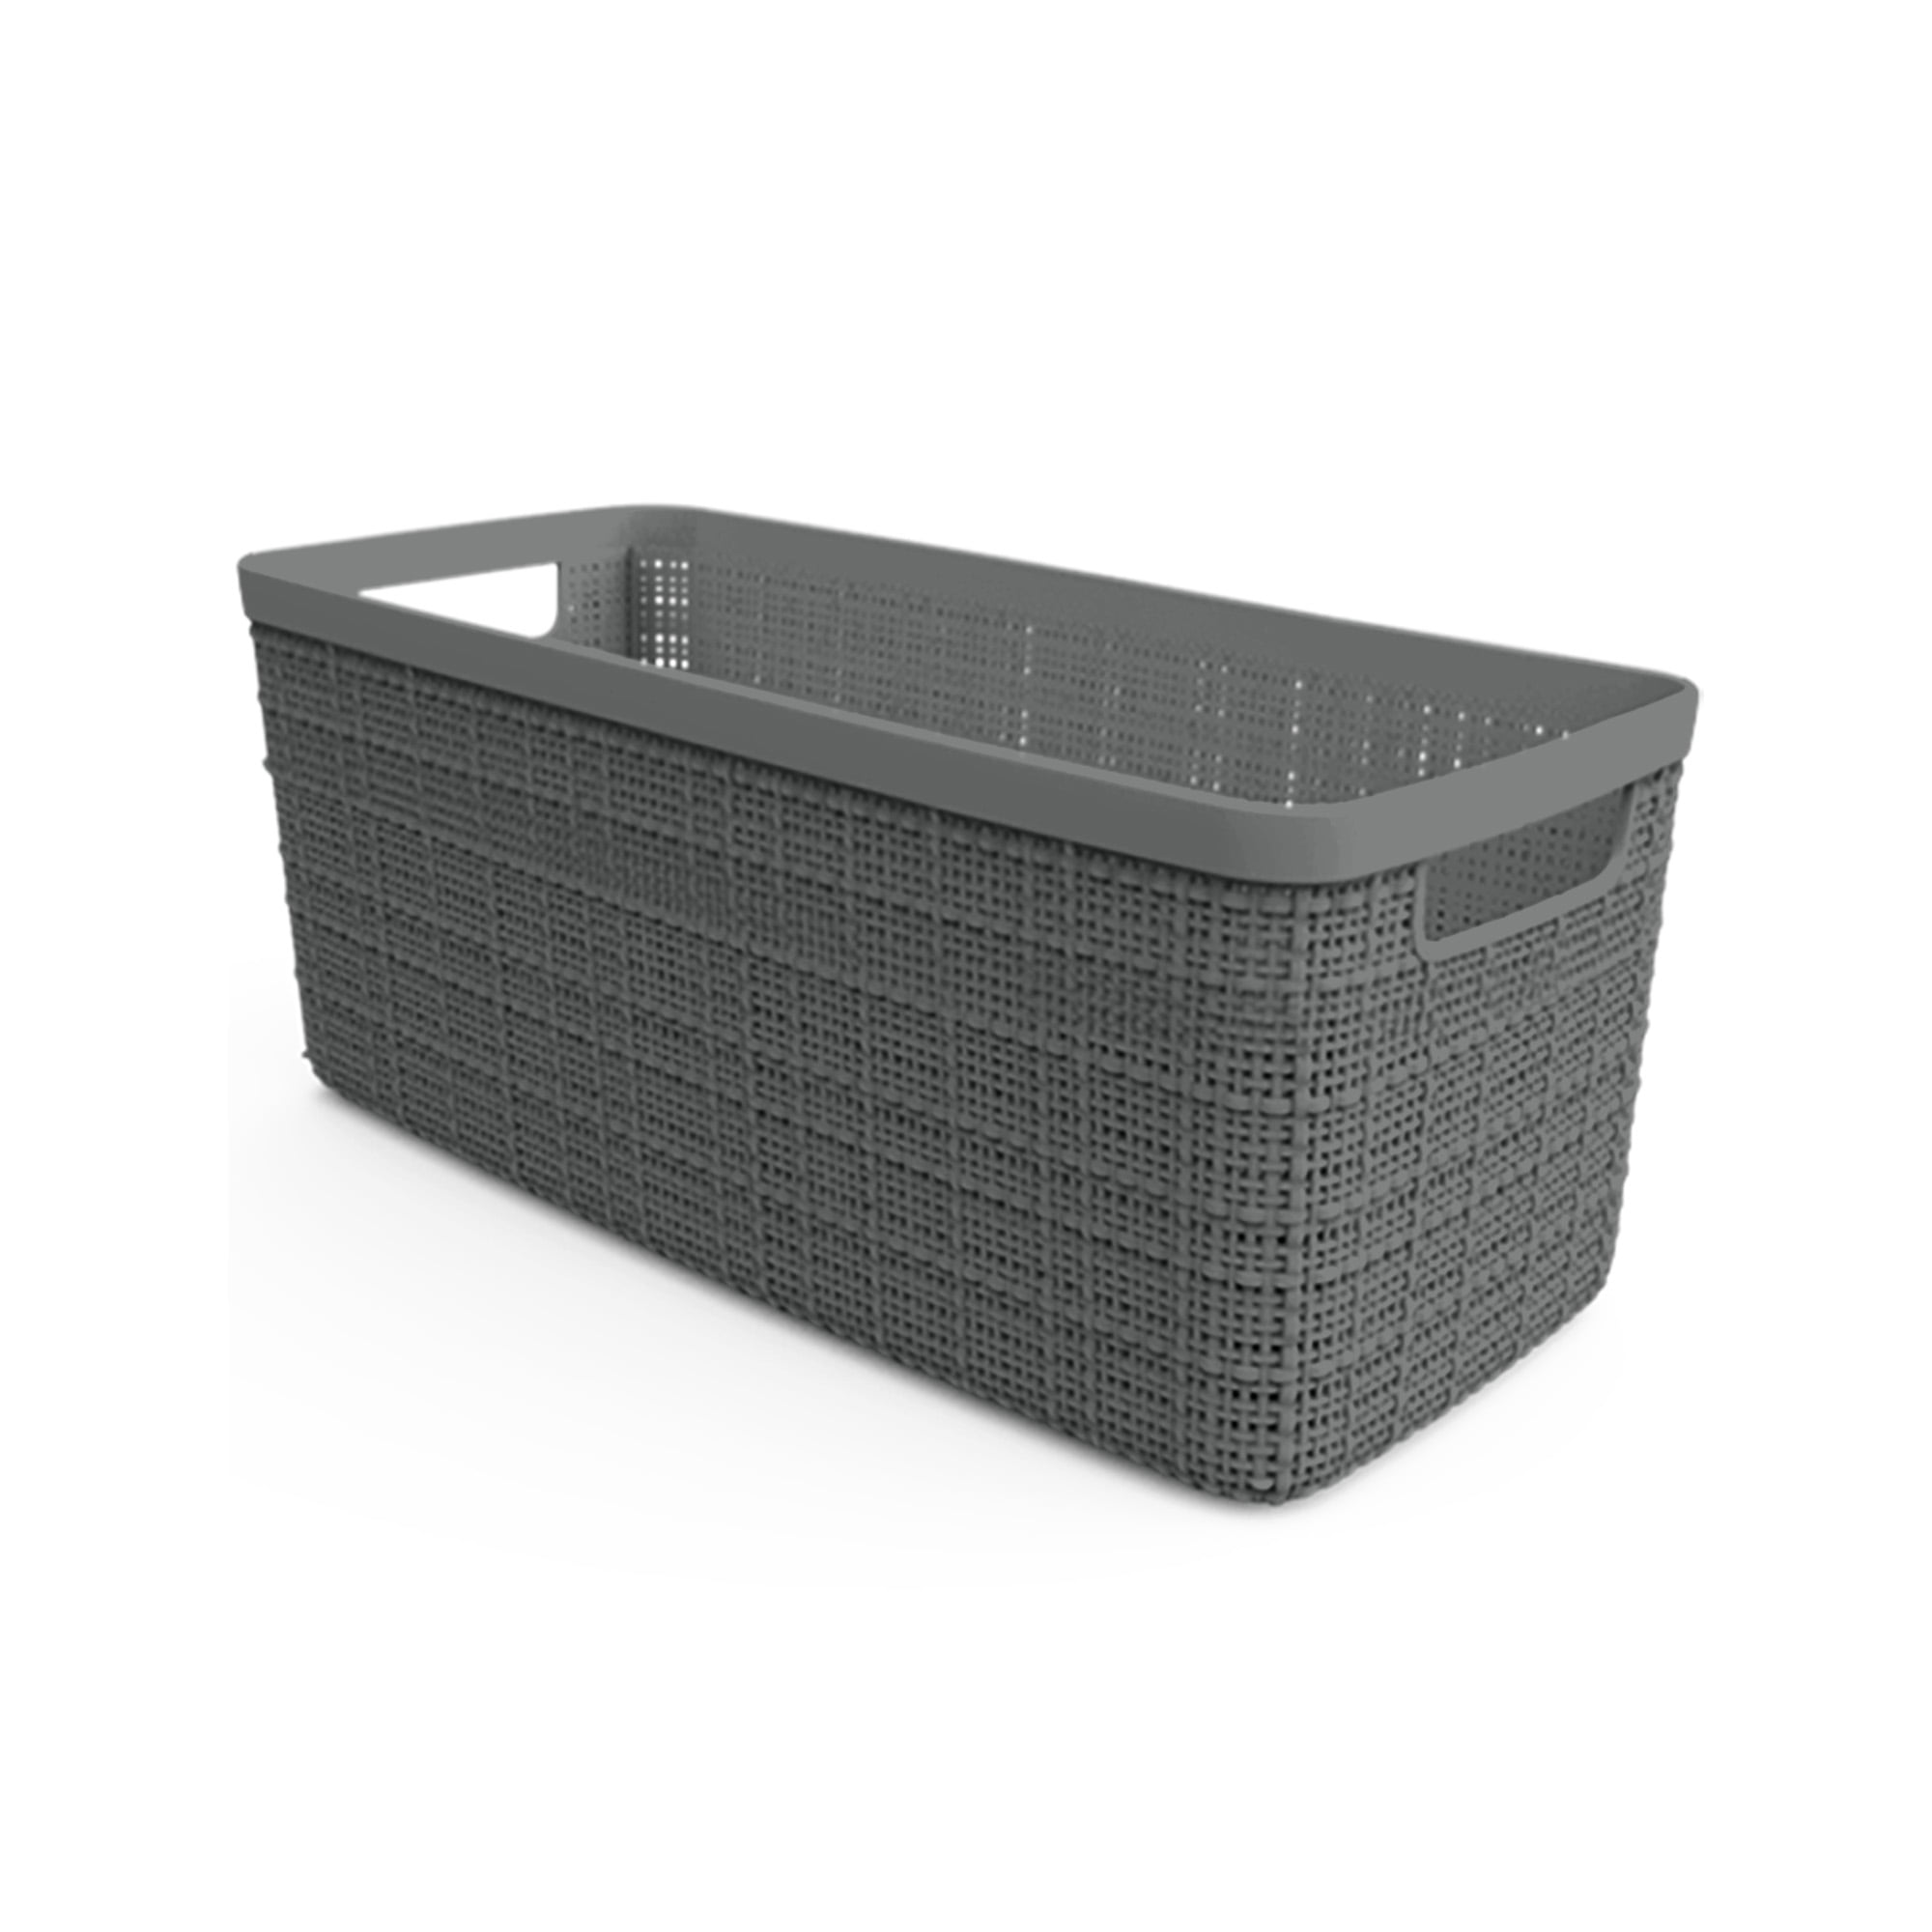 Pack of 2 Small Handy Basket Mutli Purpose Organiser Home Storage Blue or Grey 